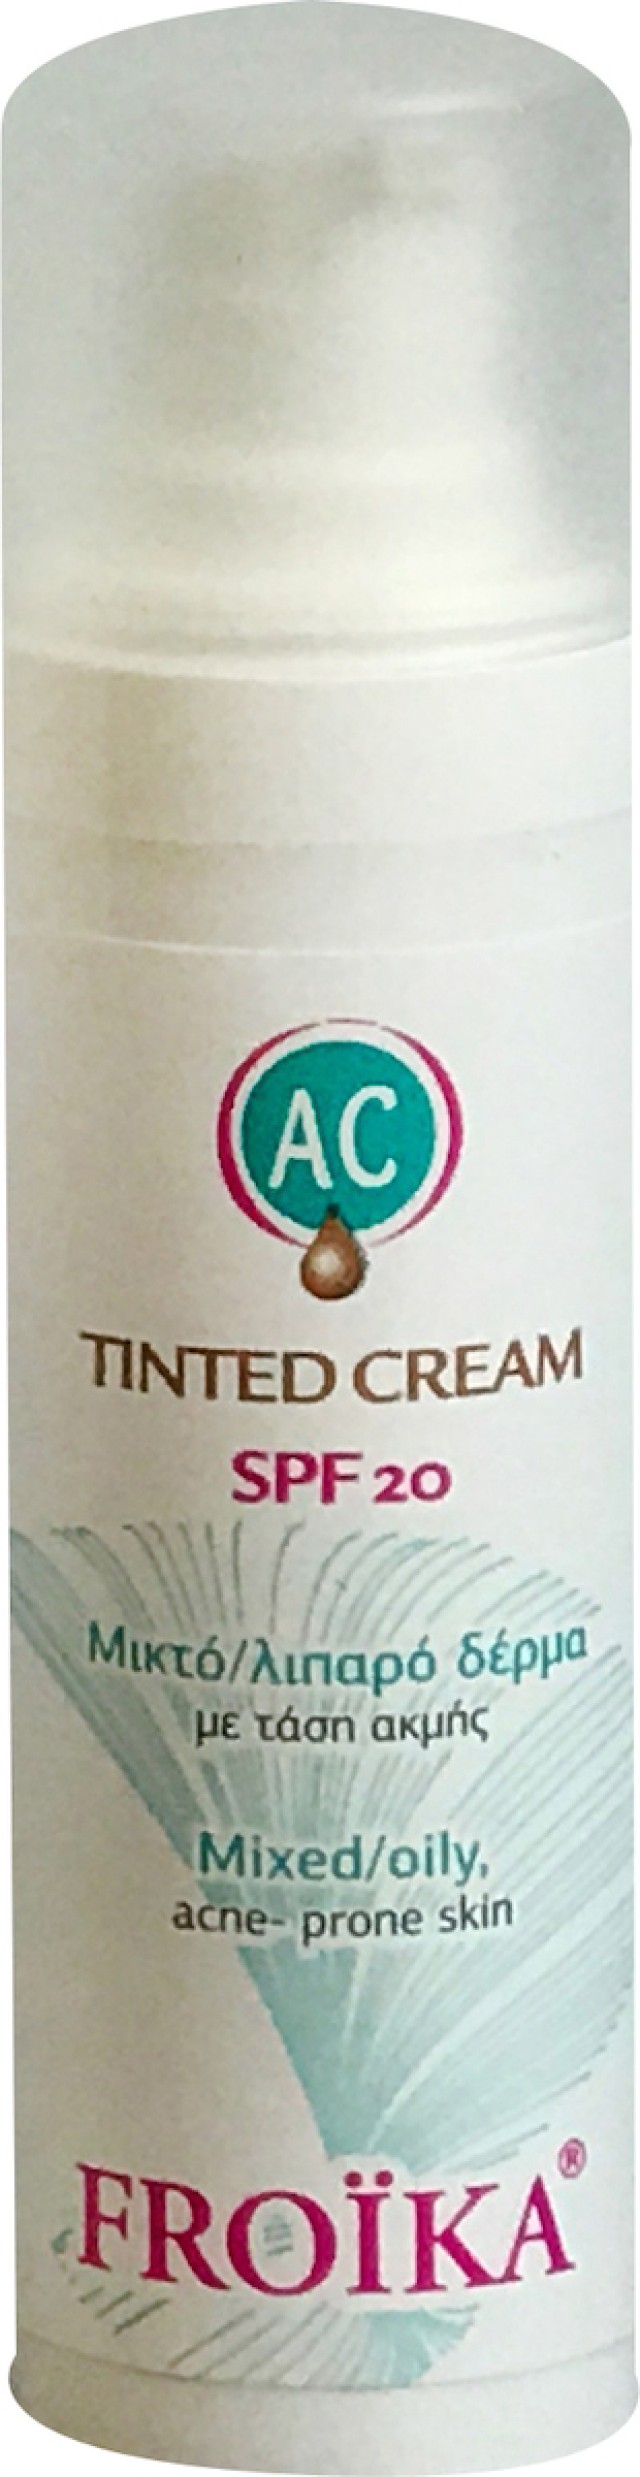 Froika AC Tinted Cream Light SPF20 Επικαλυπτική Κρέμα Με Χρώμα Ανοιχτή Απόχρωση 30ml